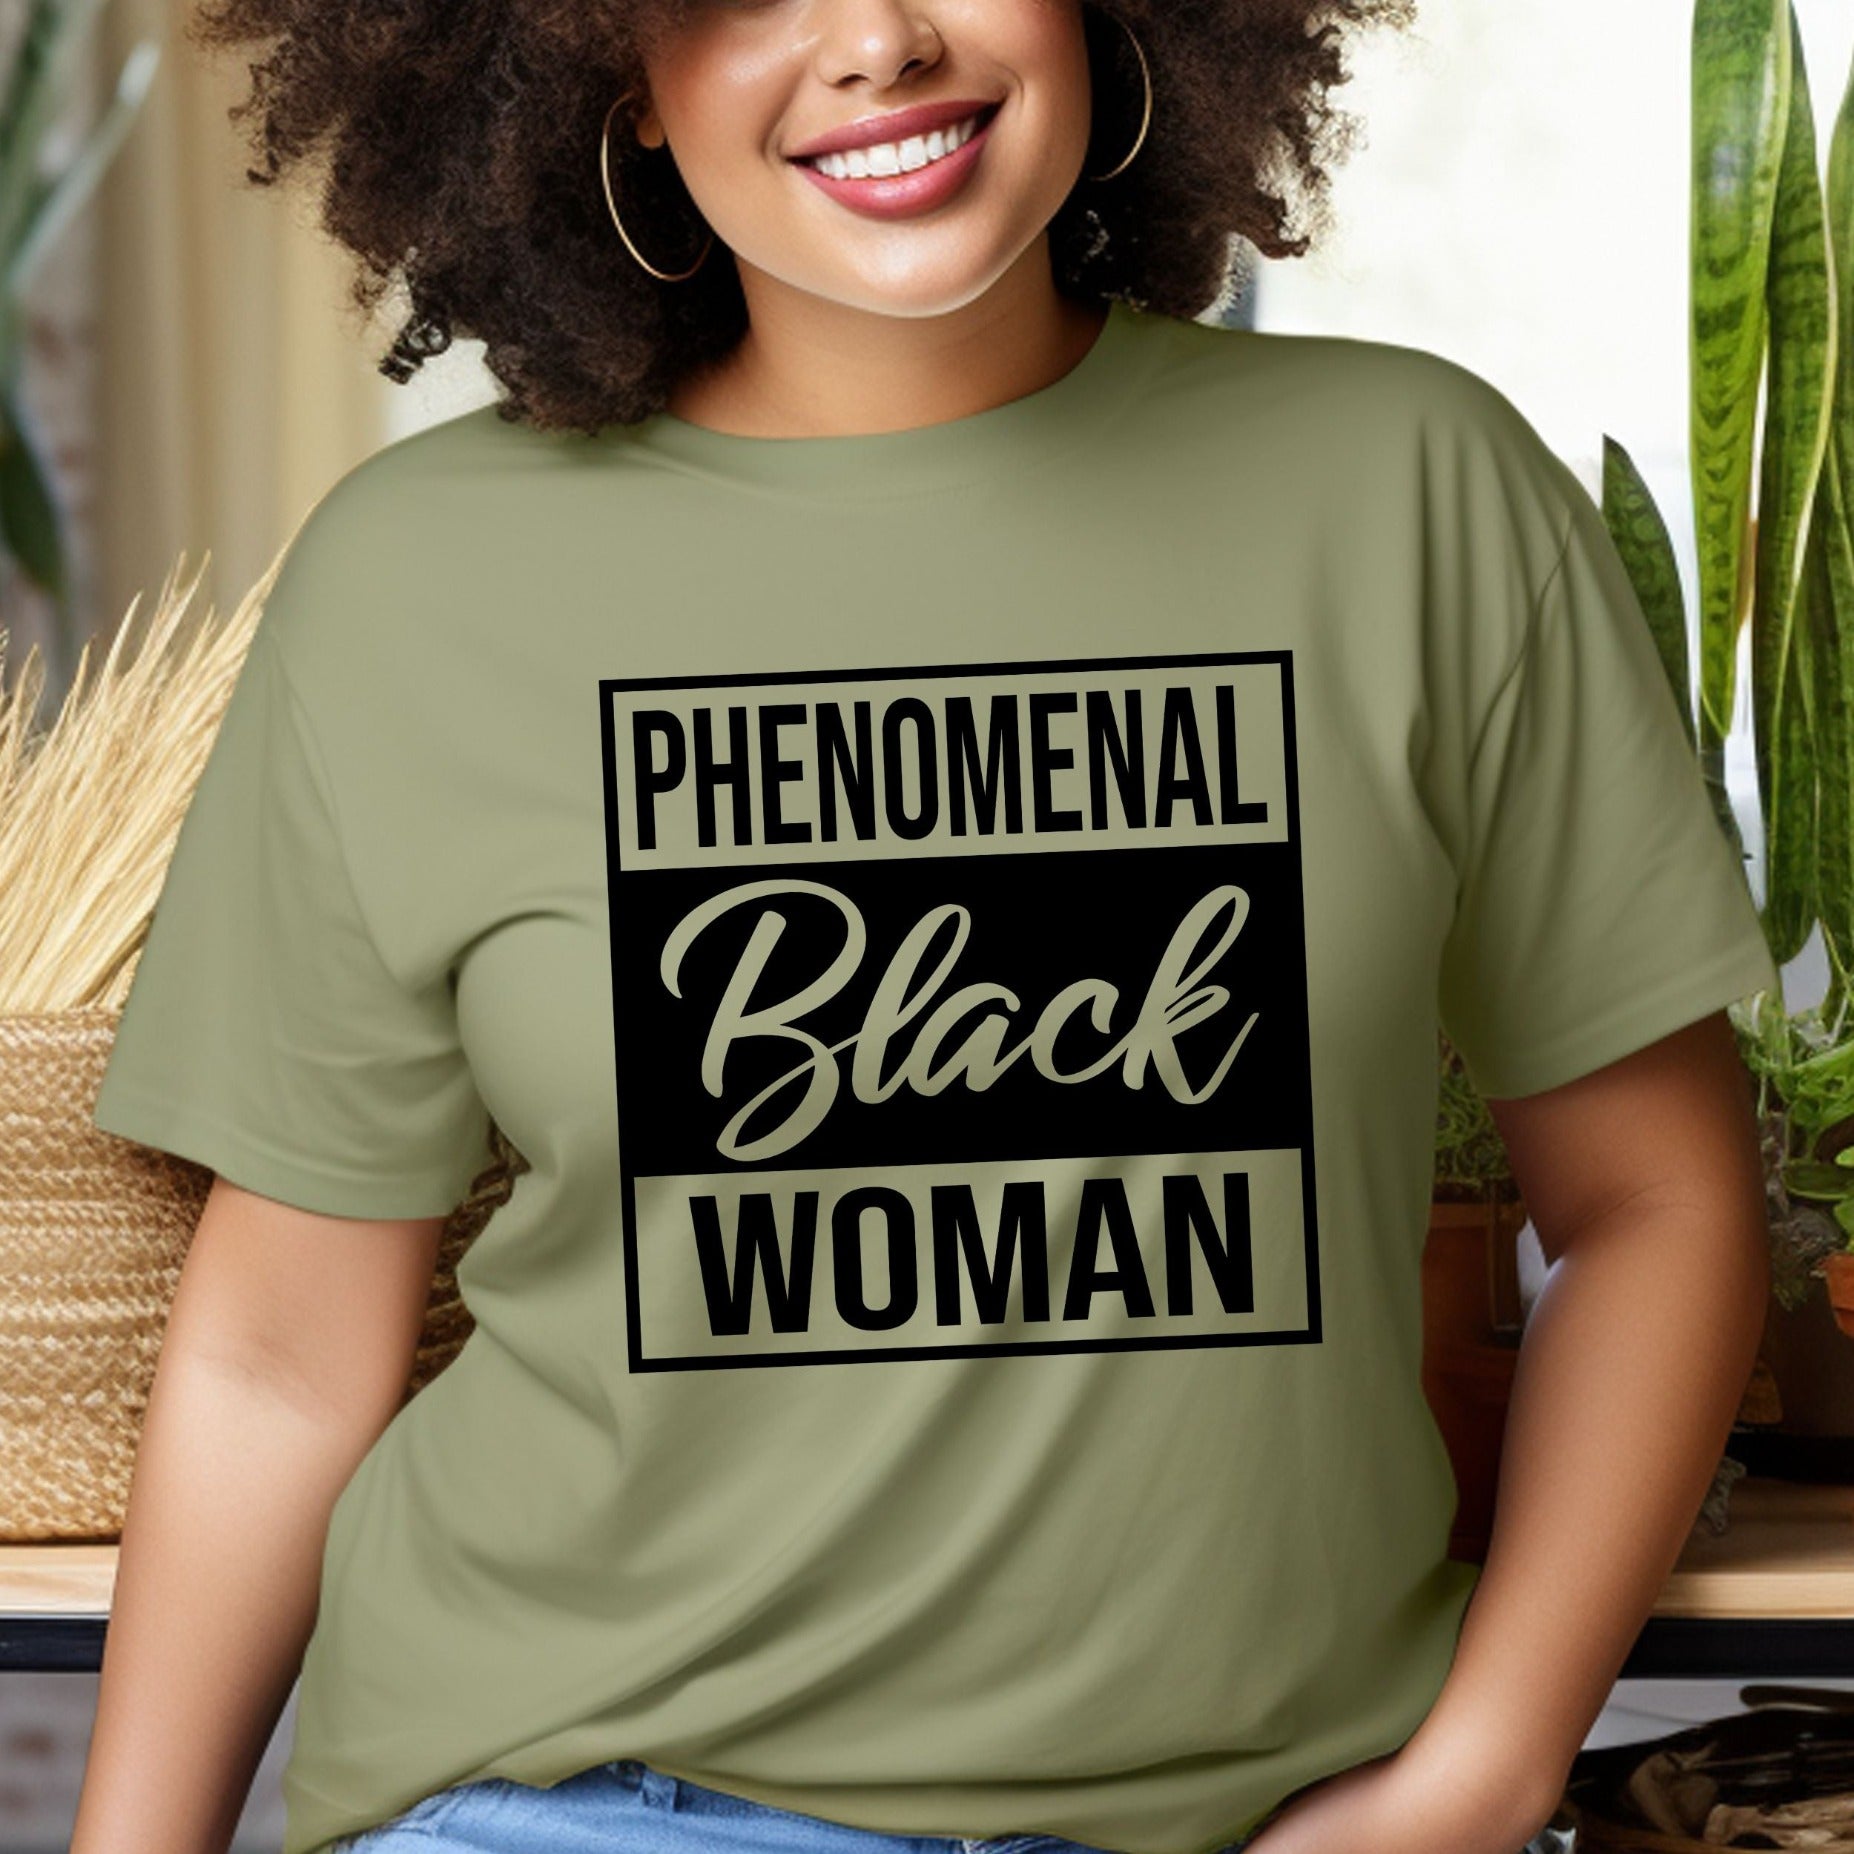 Phenomenal Woman Shirt - Black Women Empowerment